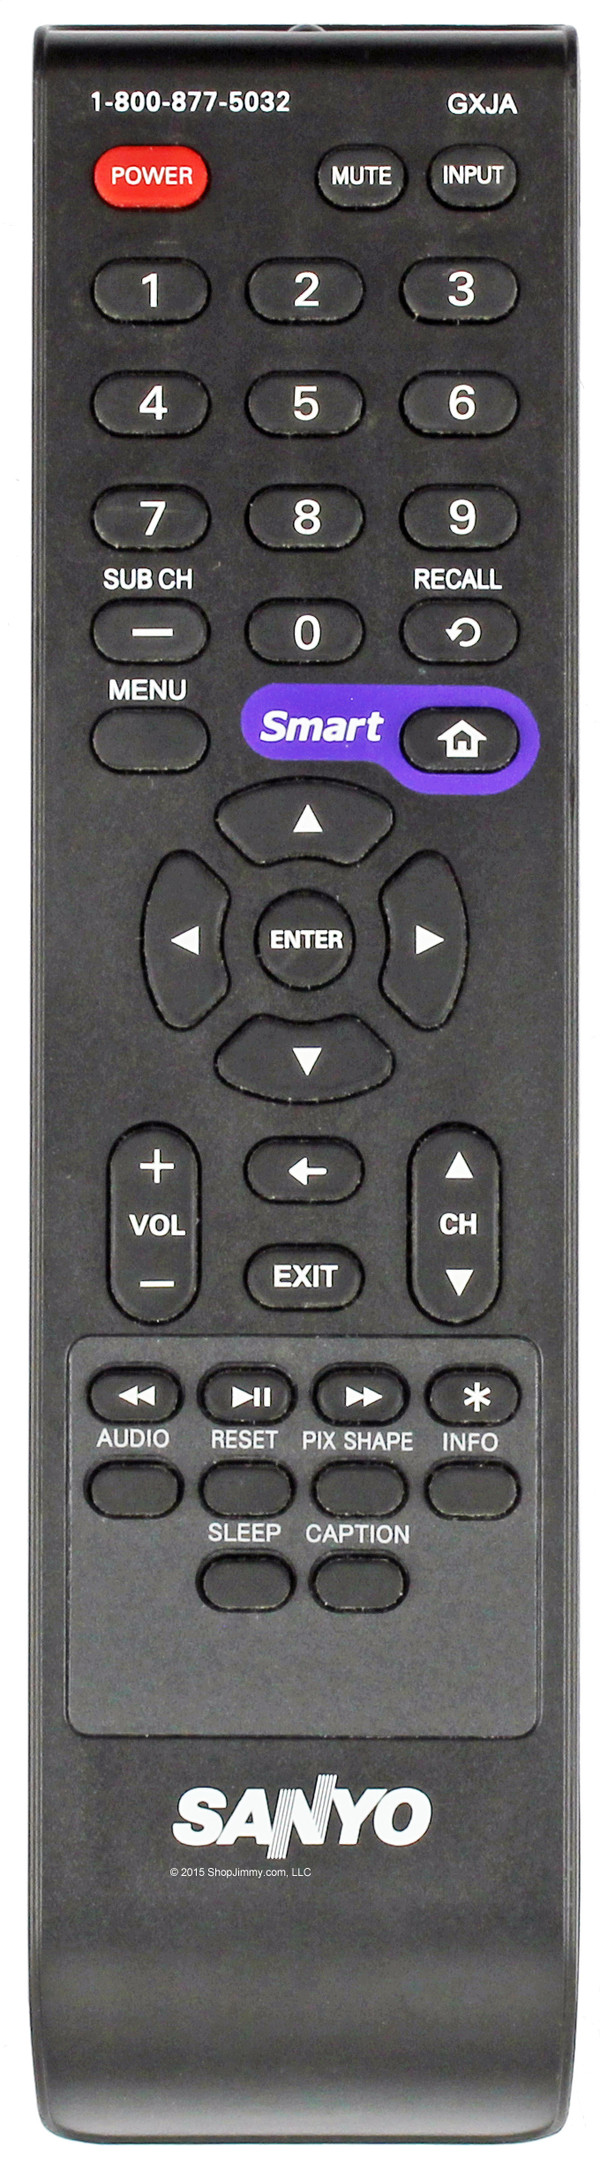 Sanyo GXJA (1LB0U10B04200) Remote Control for DP50E84